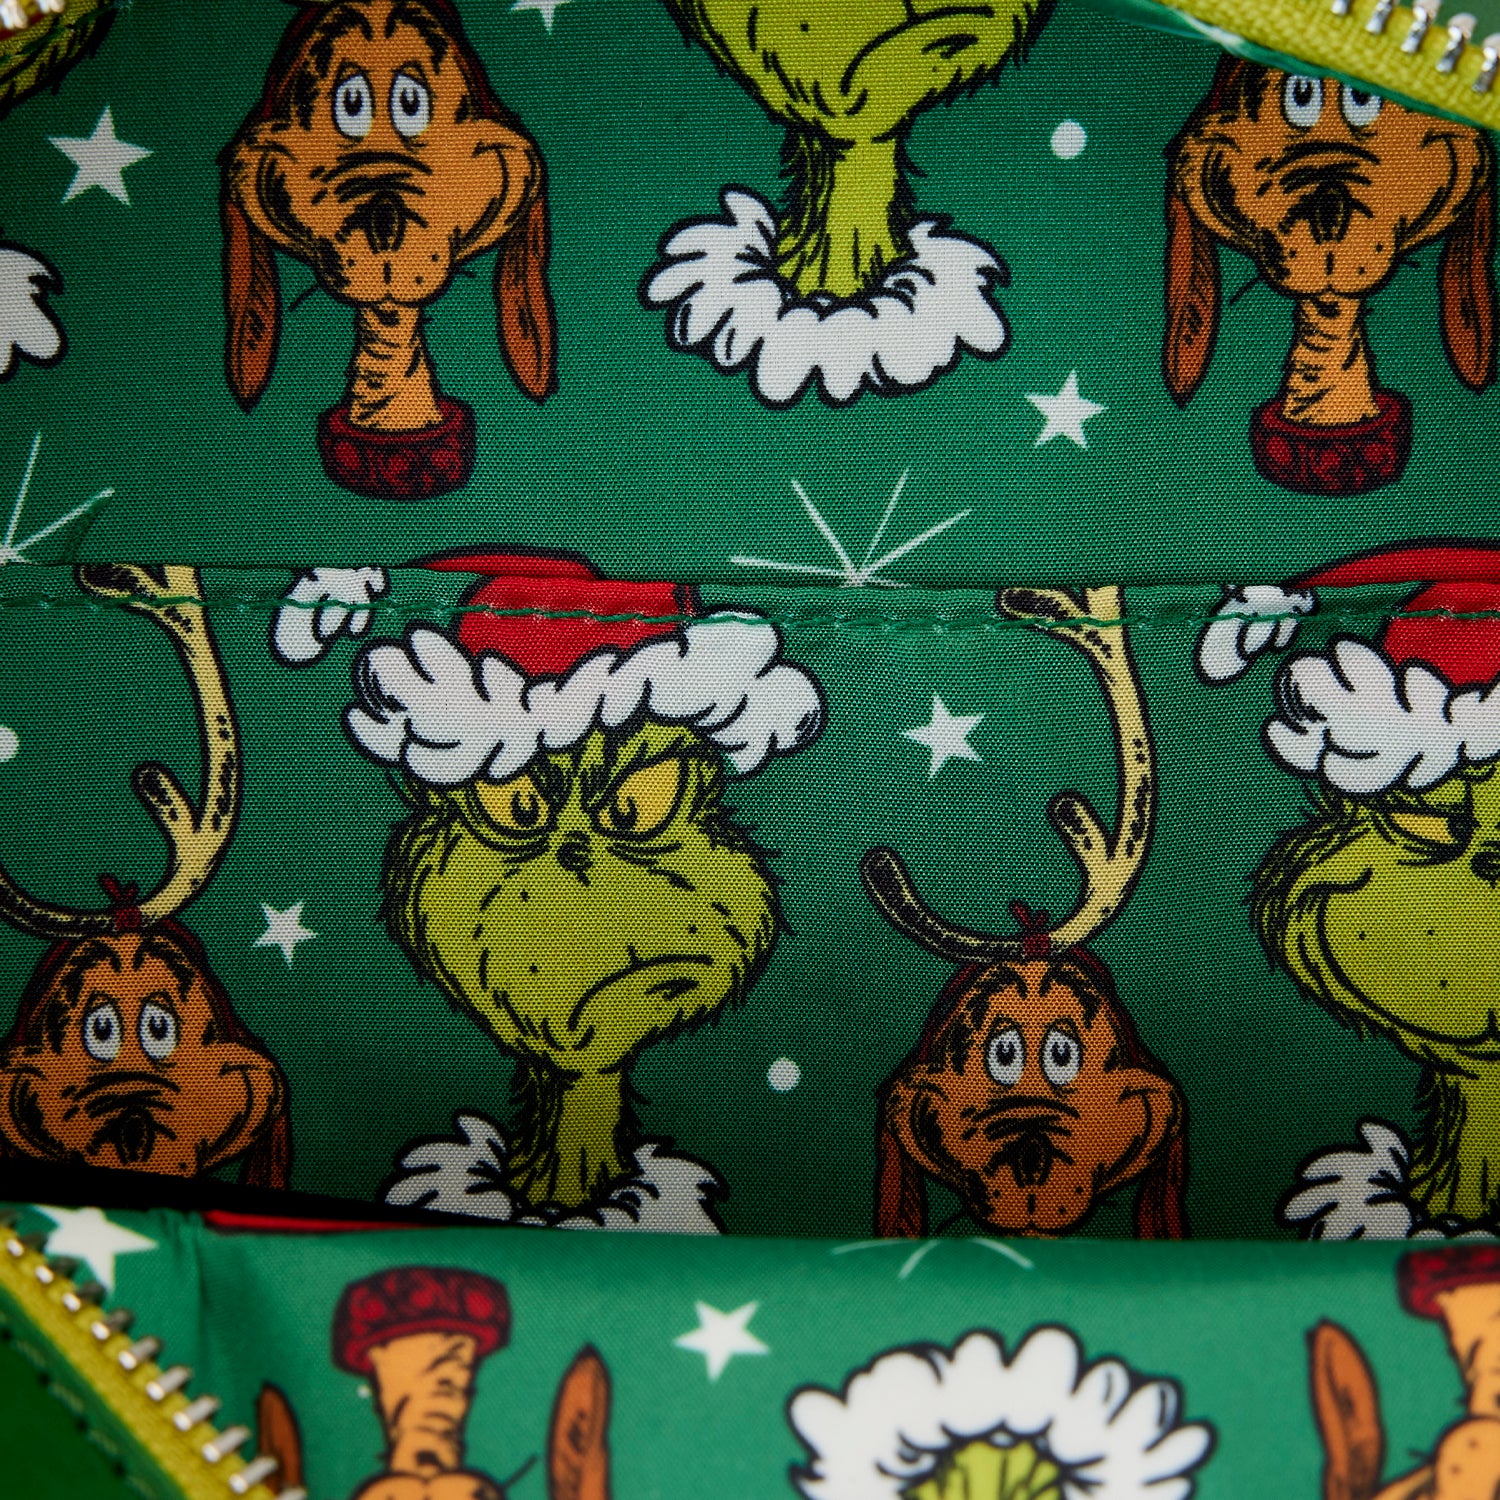 Dr. Seuss | How The Grinch Stole Christmas Wreath Figural Crossbody